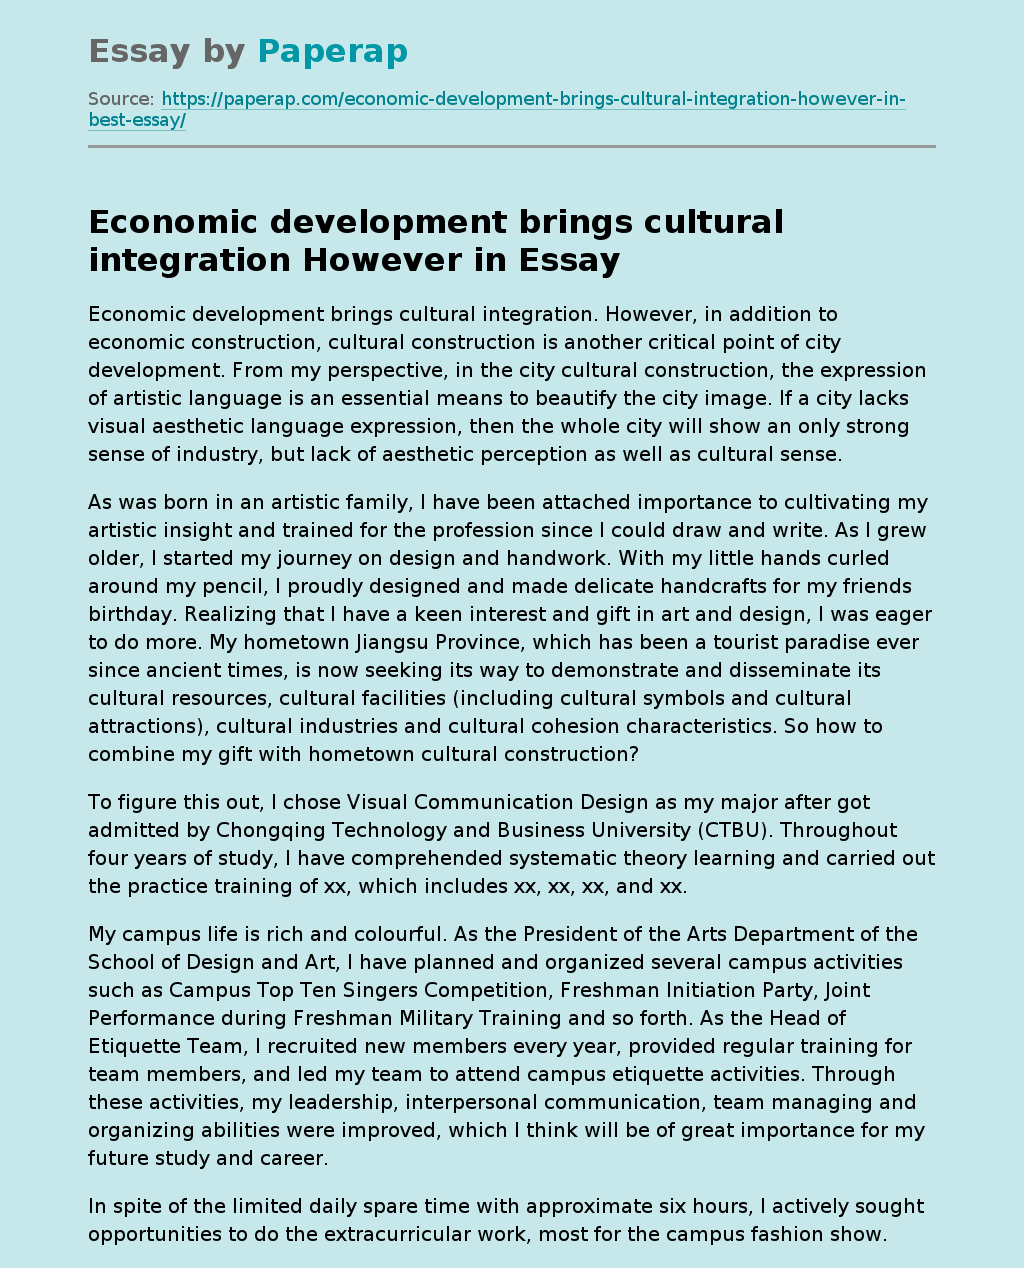 Economic Development and Cultural Integration